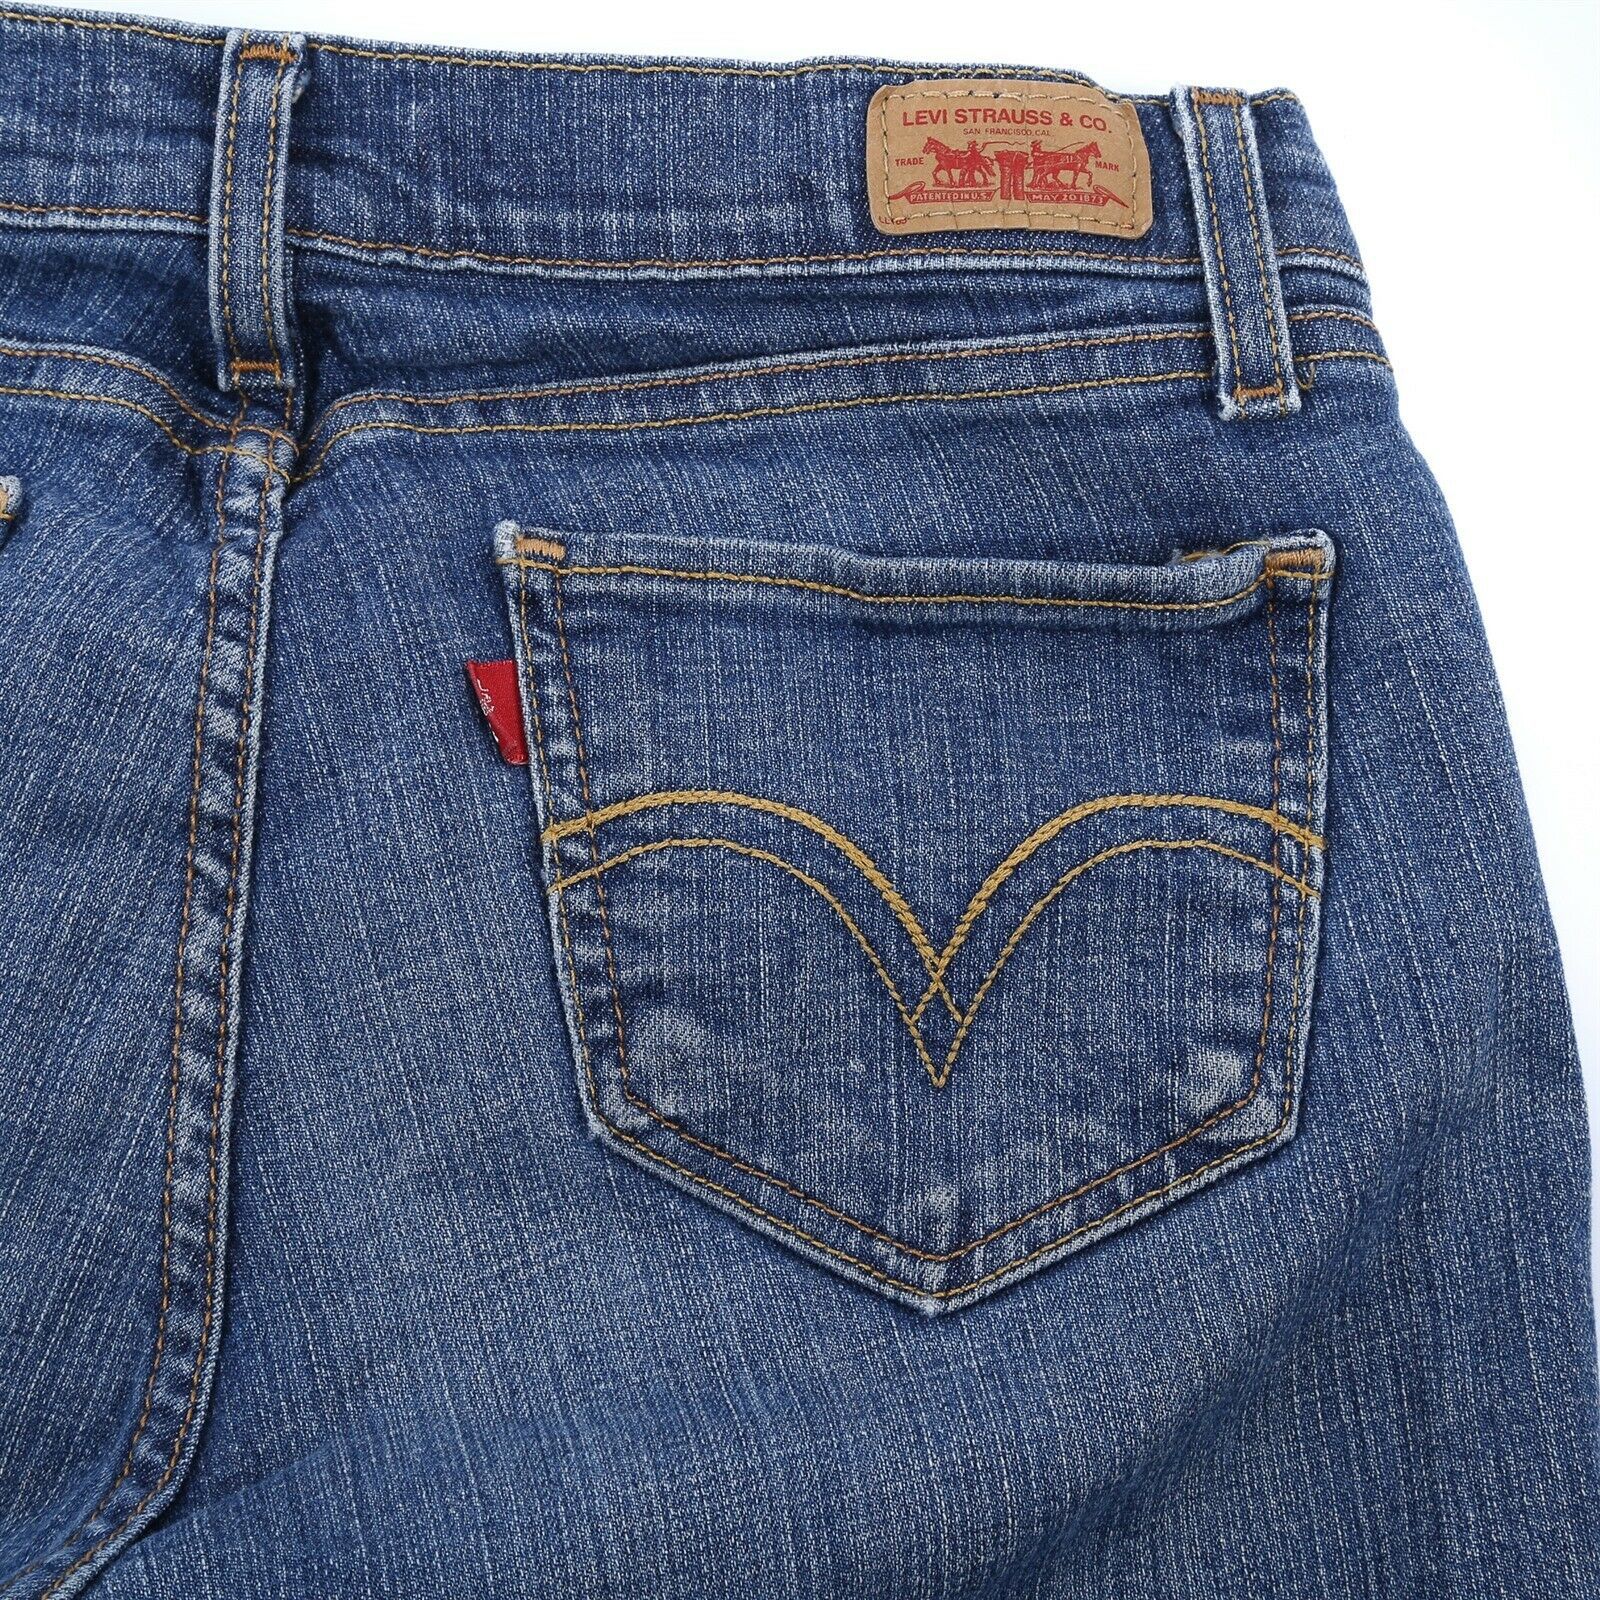 levi's 528 curvy cut skinny jeans